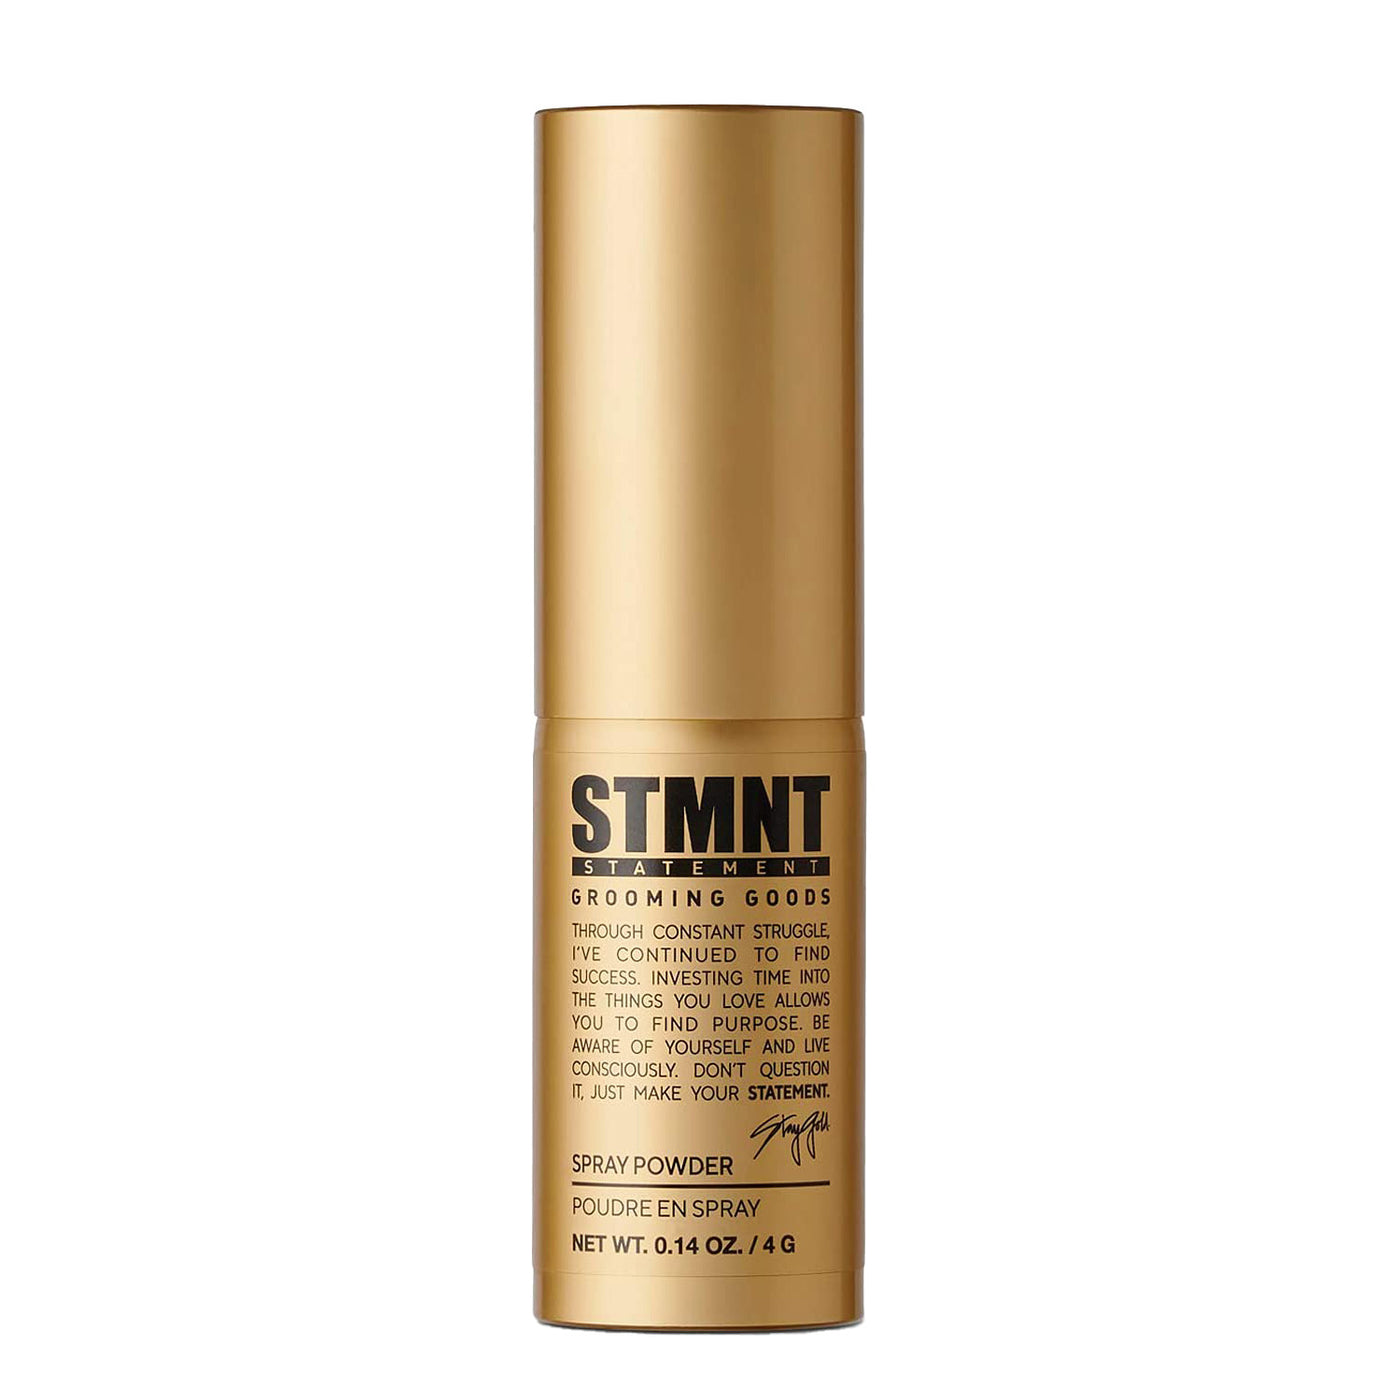 STMNT Grooming Goods Spray Powder (4g) 1